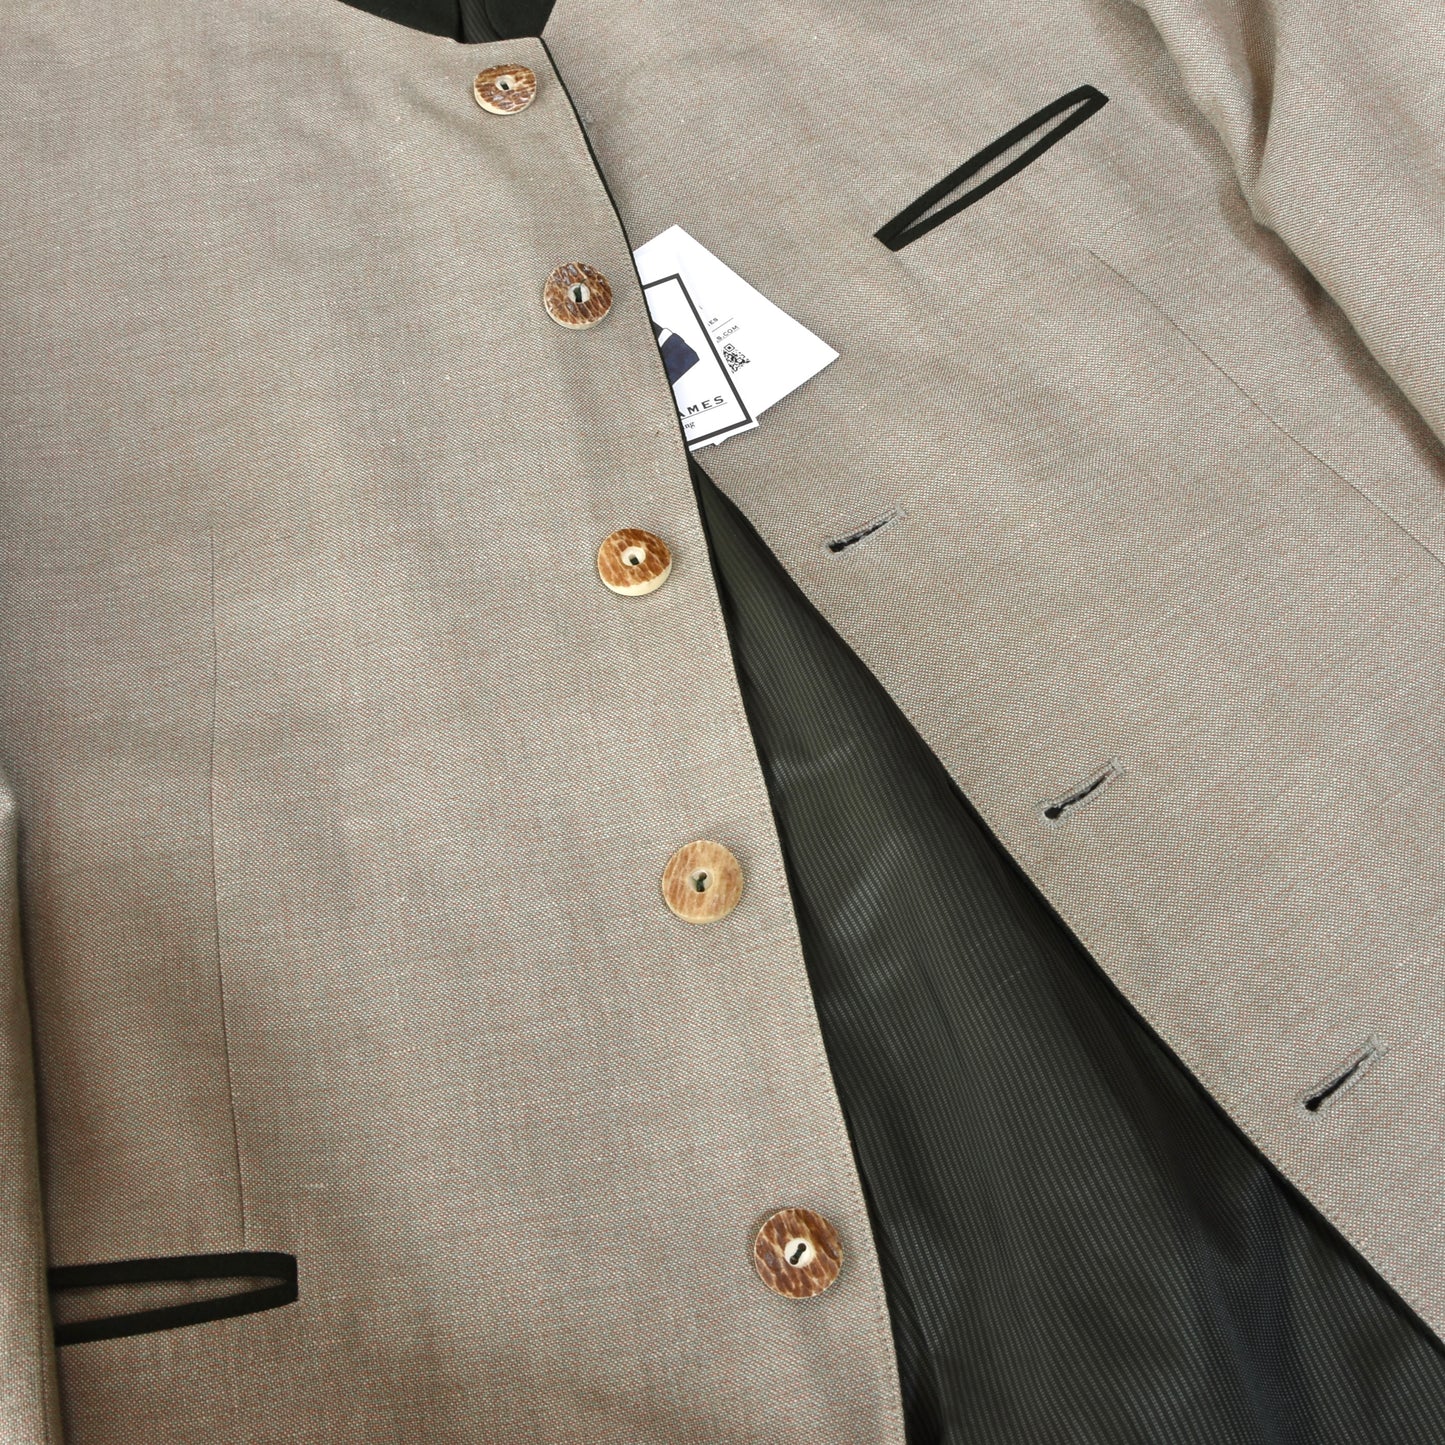 Tofana Cotton-Linen Janker/Jacket Size 54